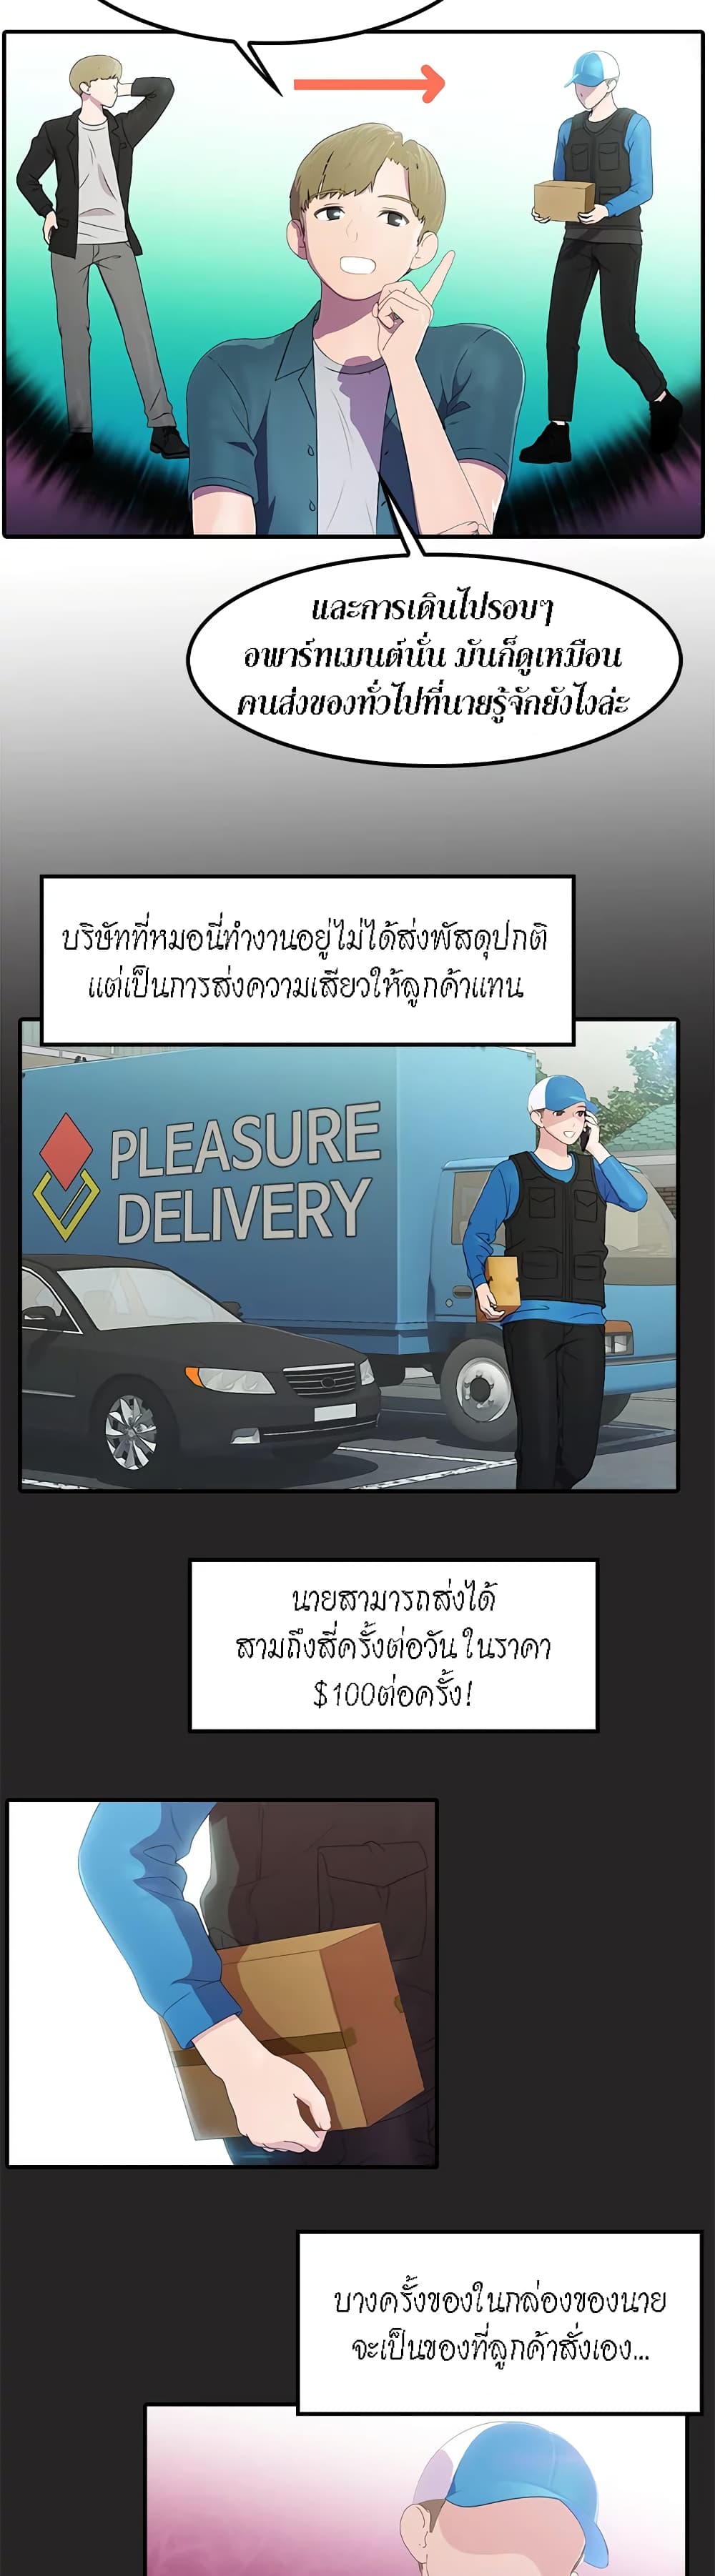 Pleasure Delivery